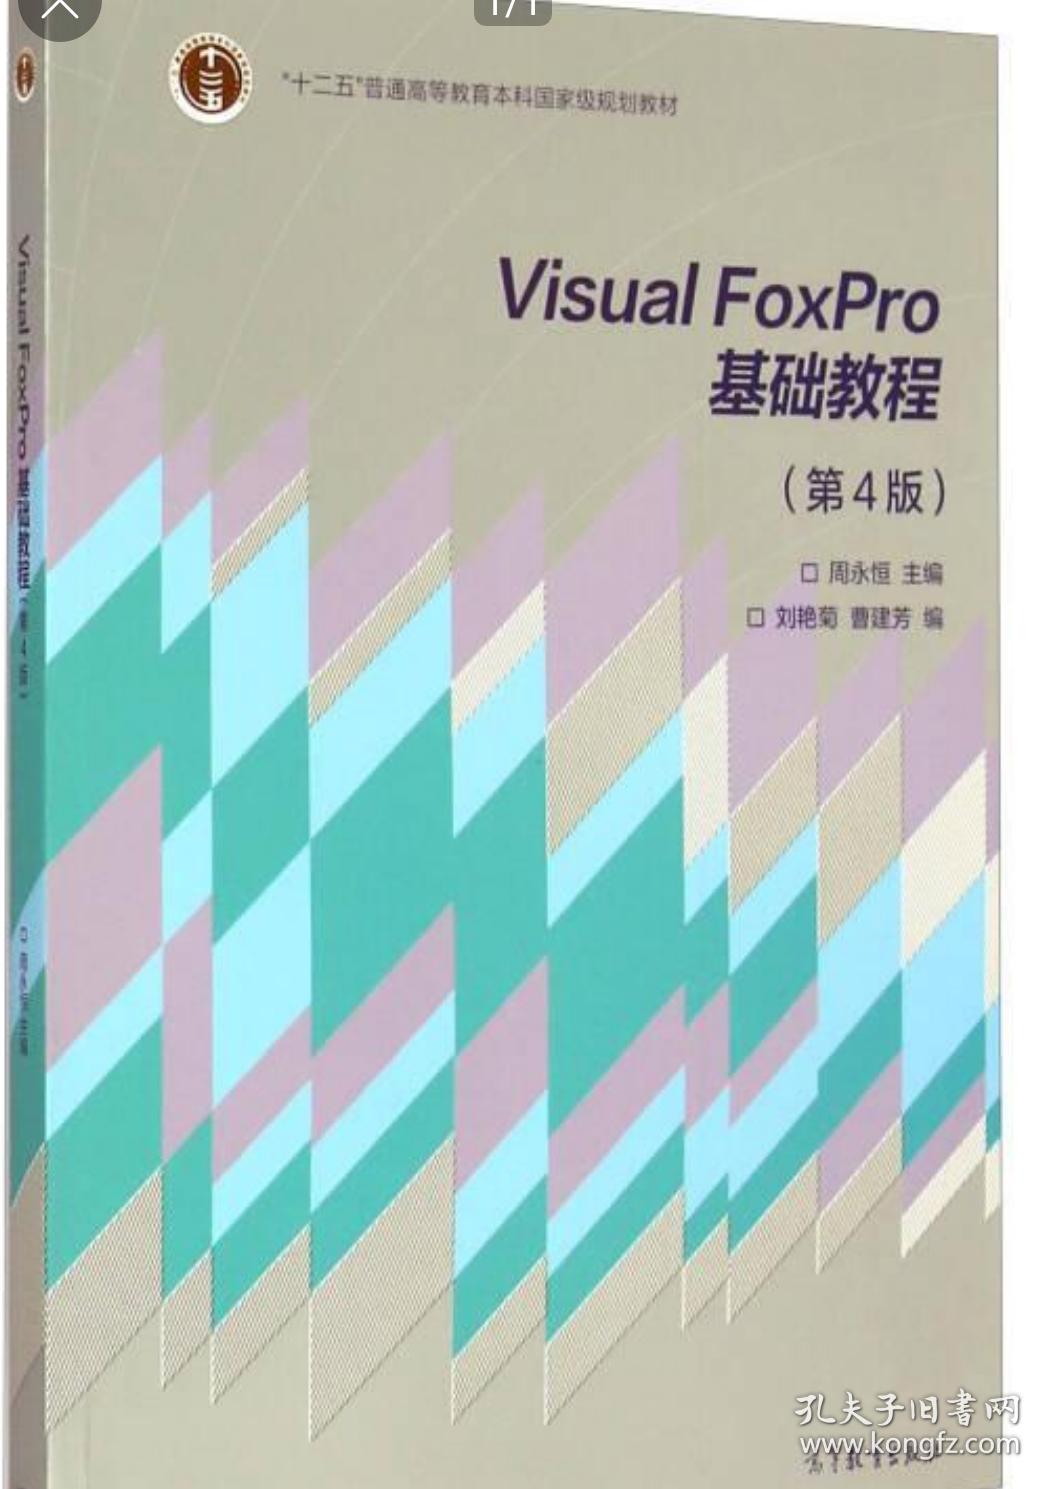 Visual FoxPro基础教程+Visual FoxPro基础教程实验指导